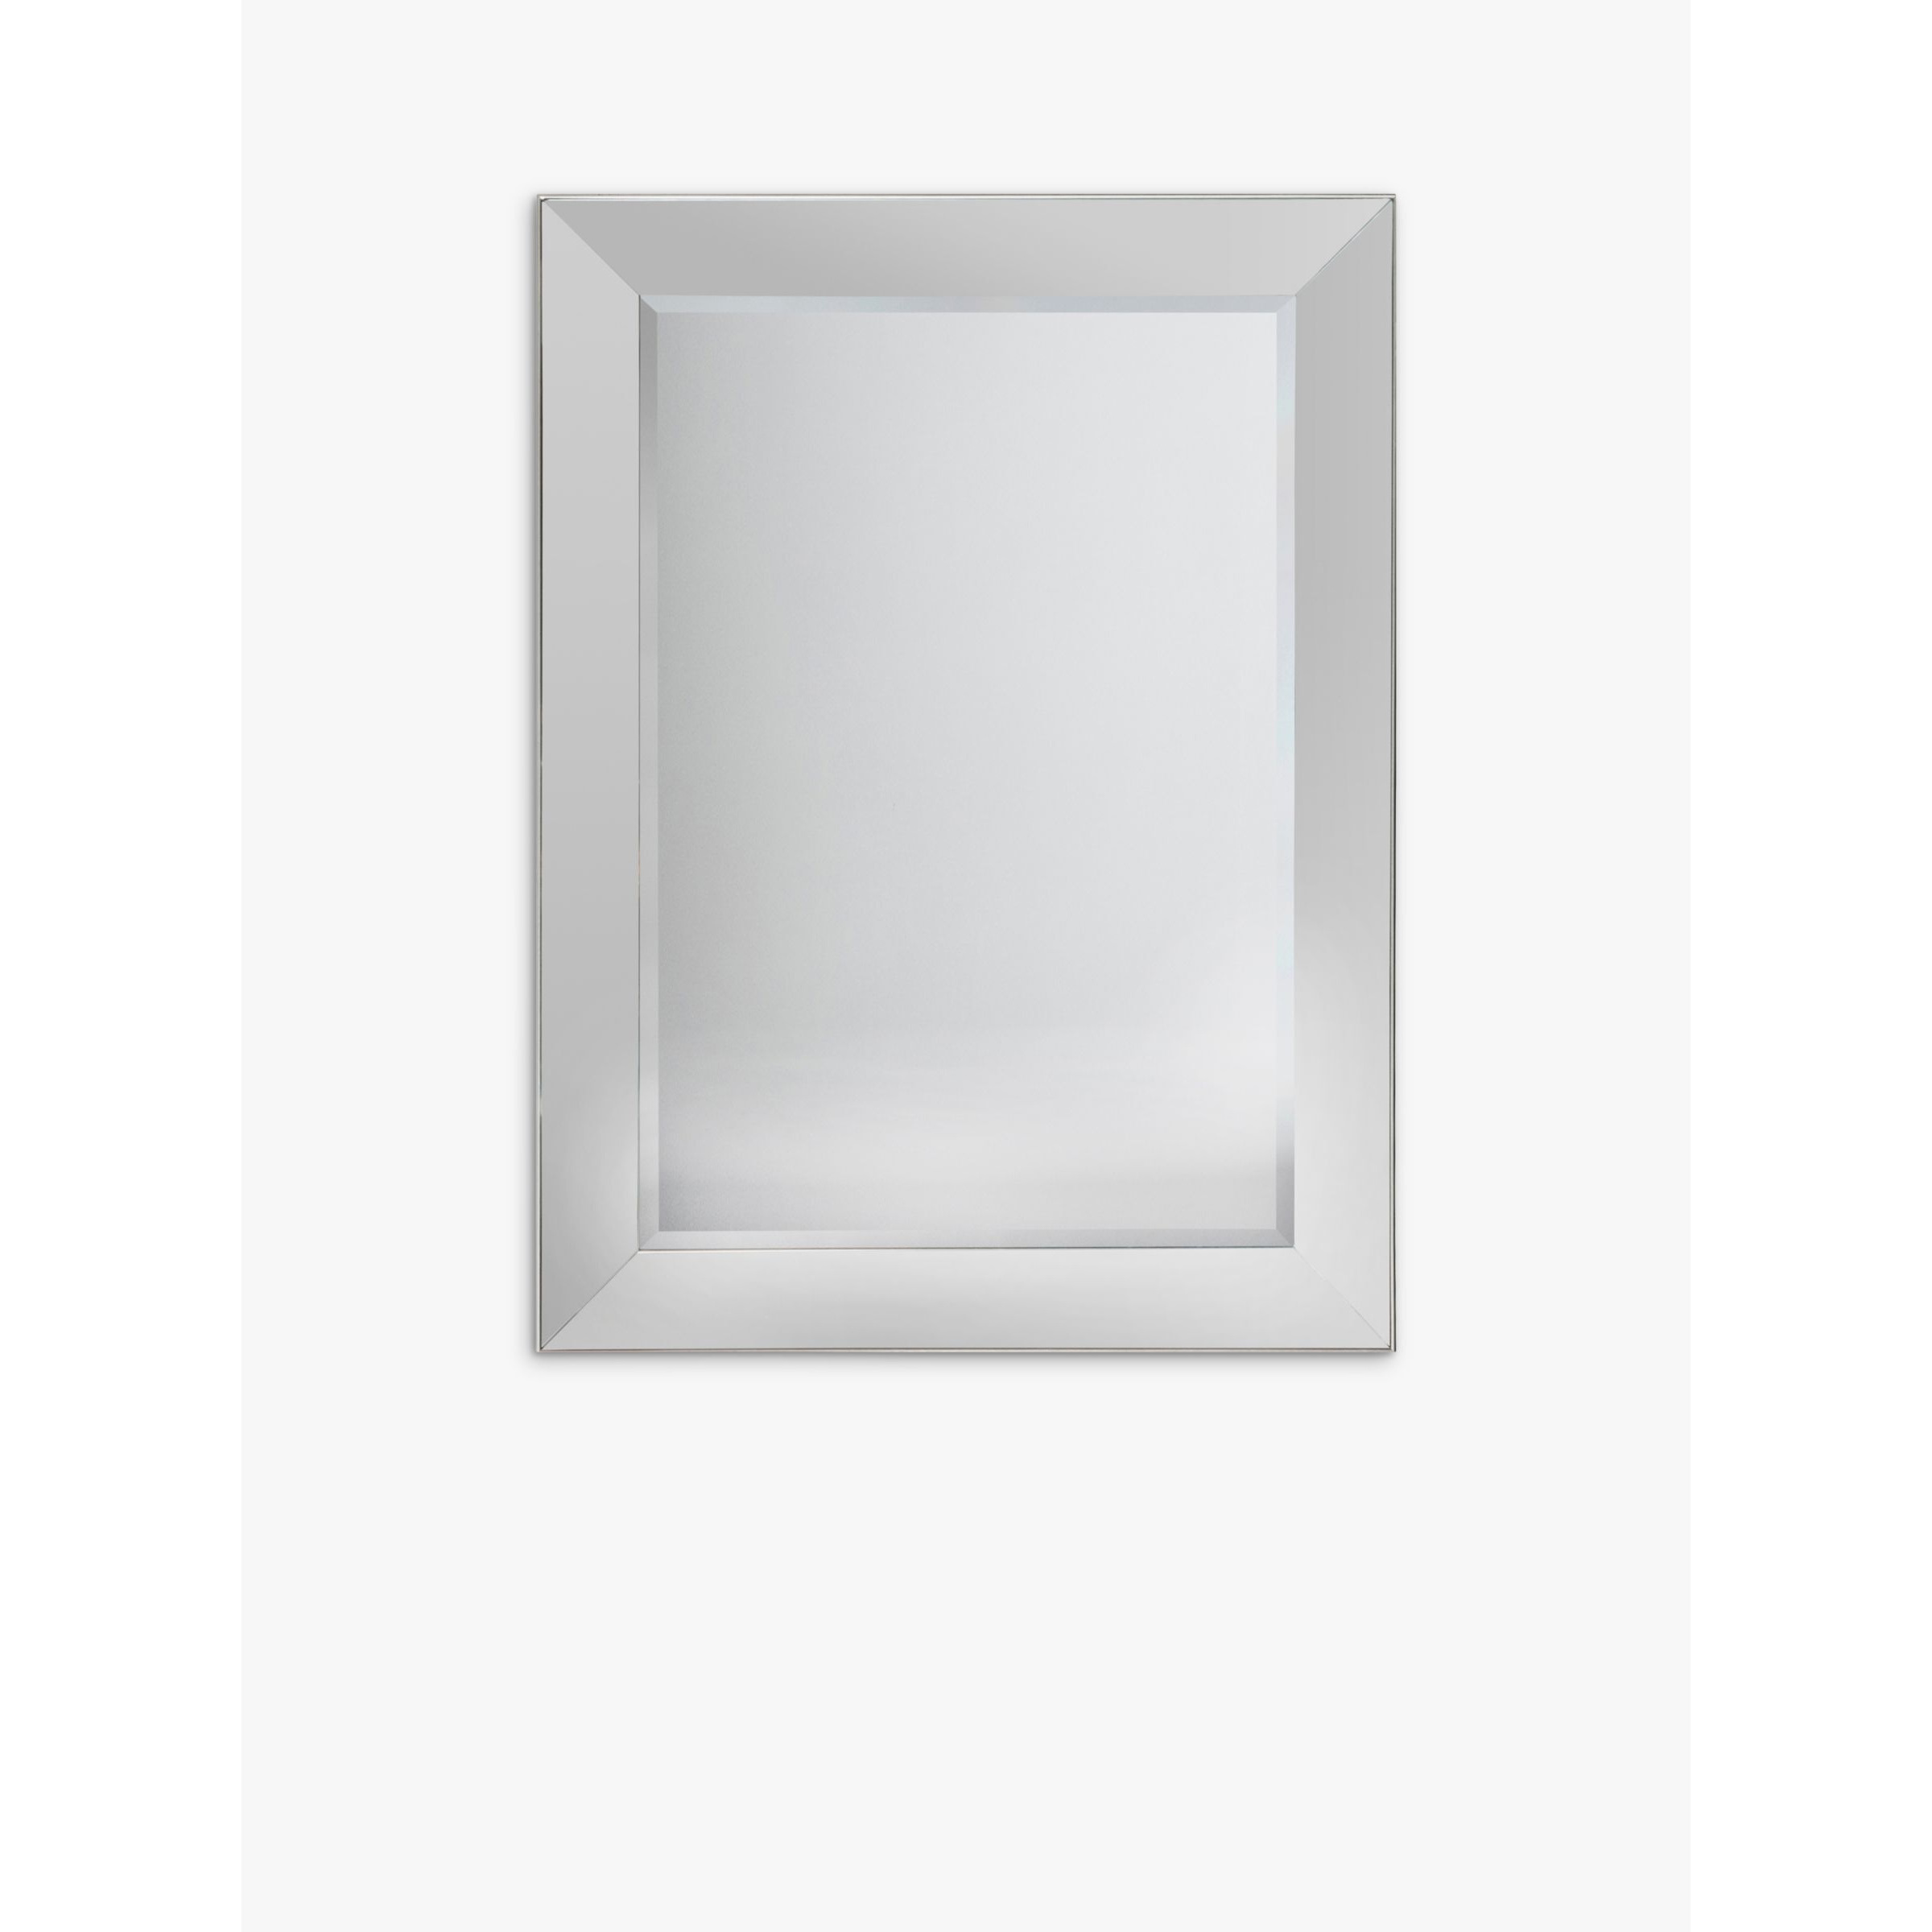 Gallery Direct Bertoni Rectangular Glass Frame Mirror, 109 x 81cm, Silver - image 1